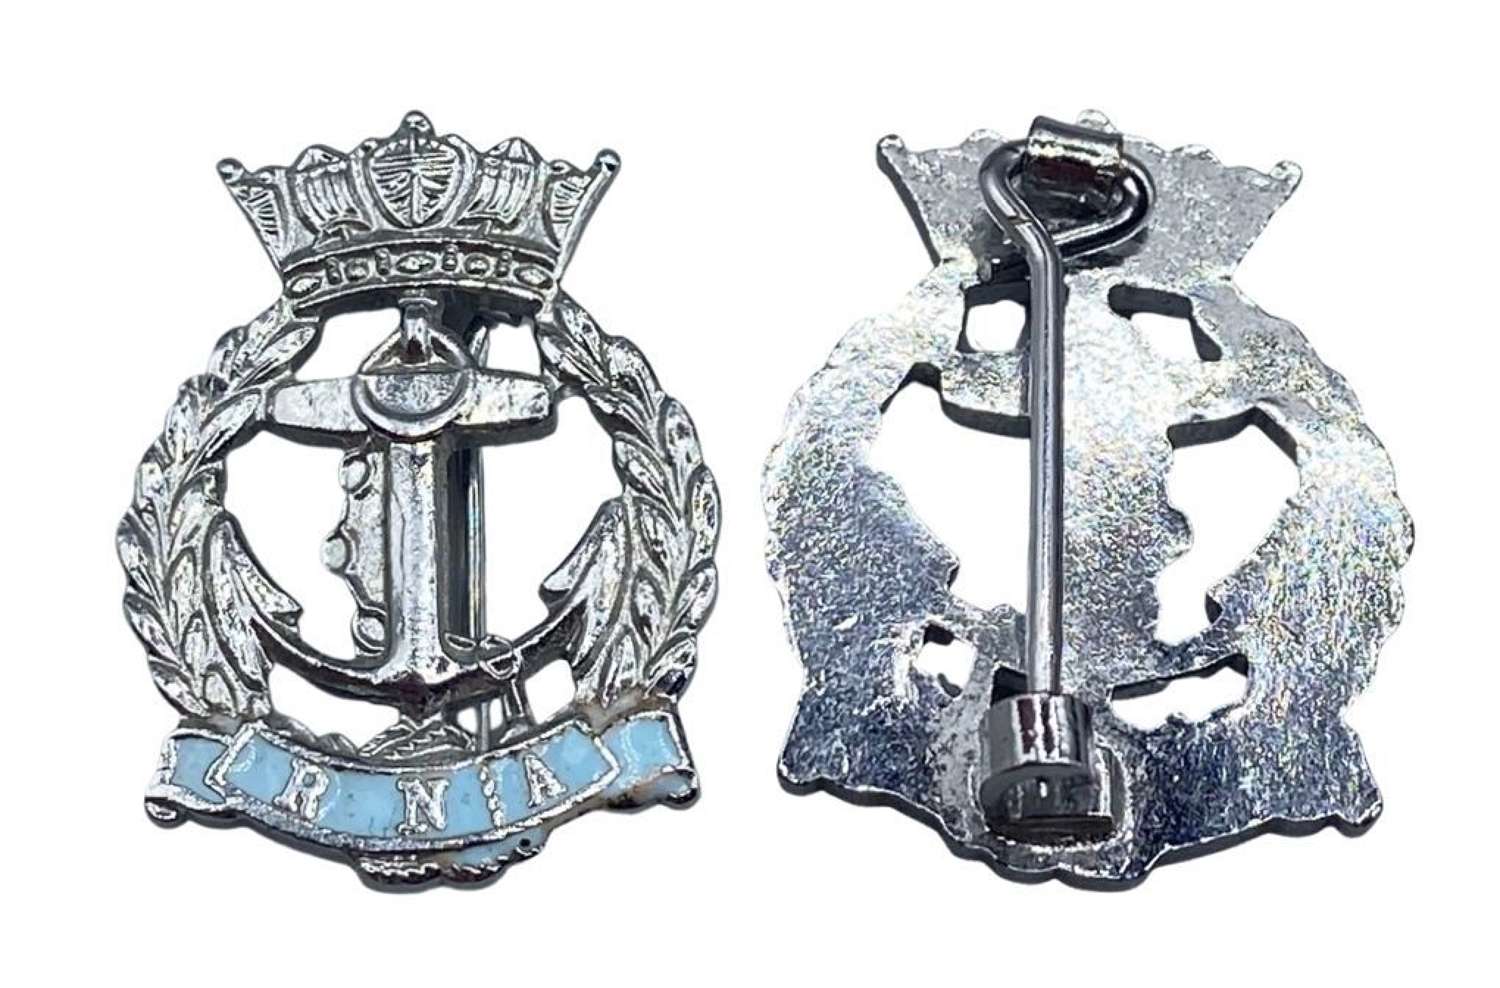 WW2 British Silver Tone & Enamel Royal Navy Association Badges